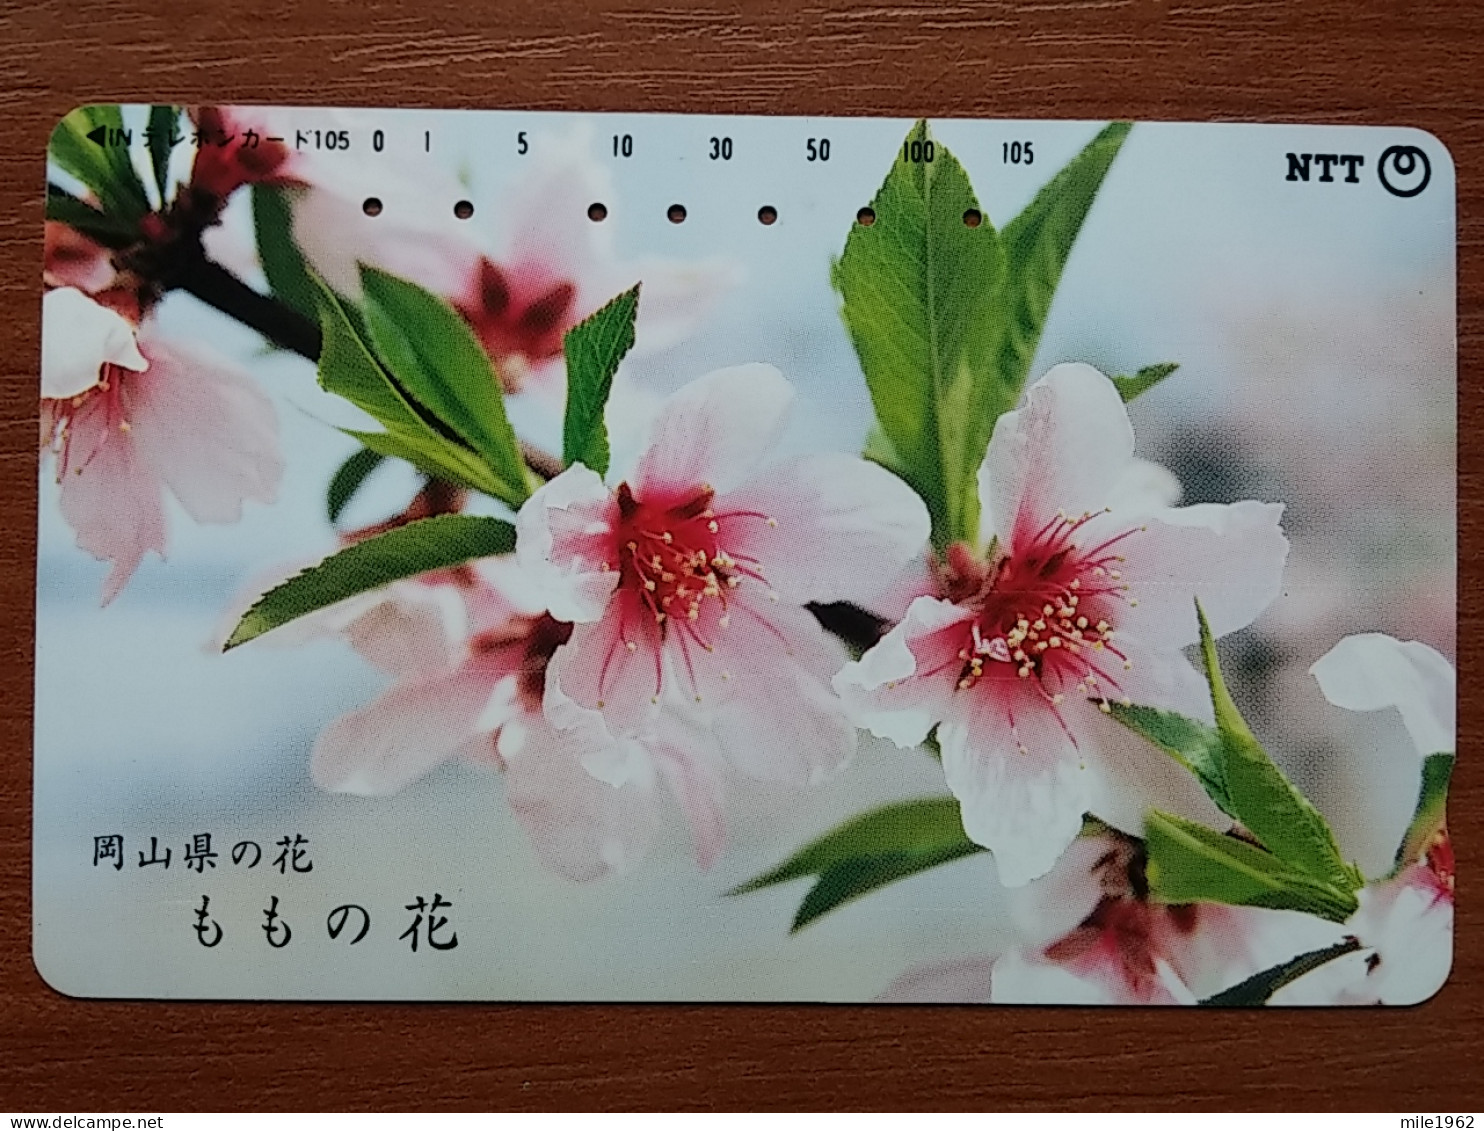 T-382 - JAPAN, Japon, Nipon, TELECARD, PHONECARD, Flower, Fleur, NTT 351-219 - Bloemen